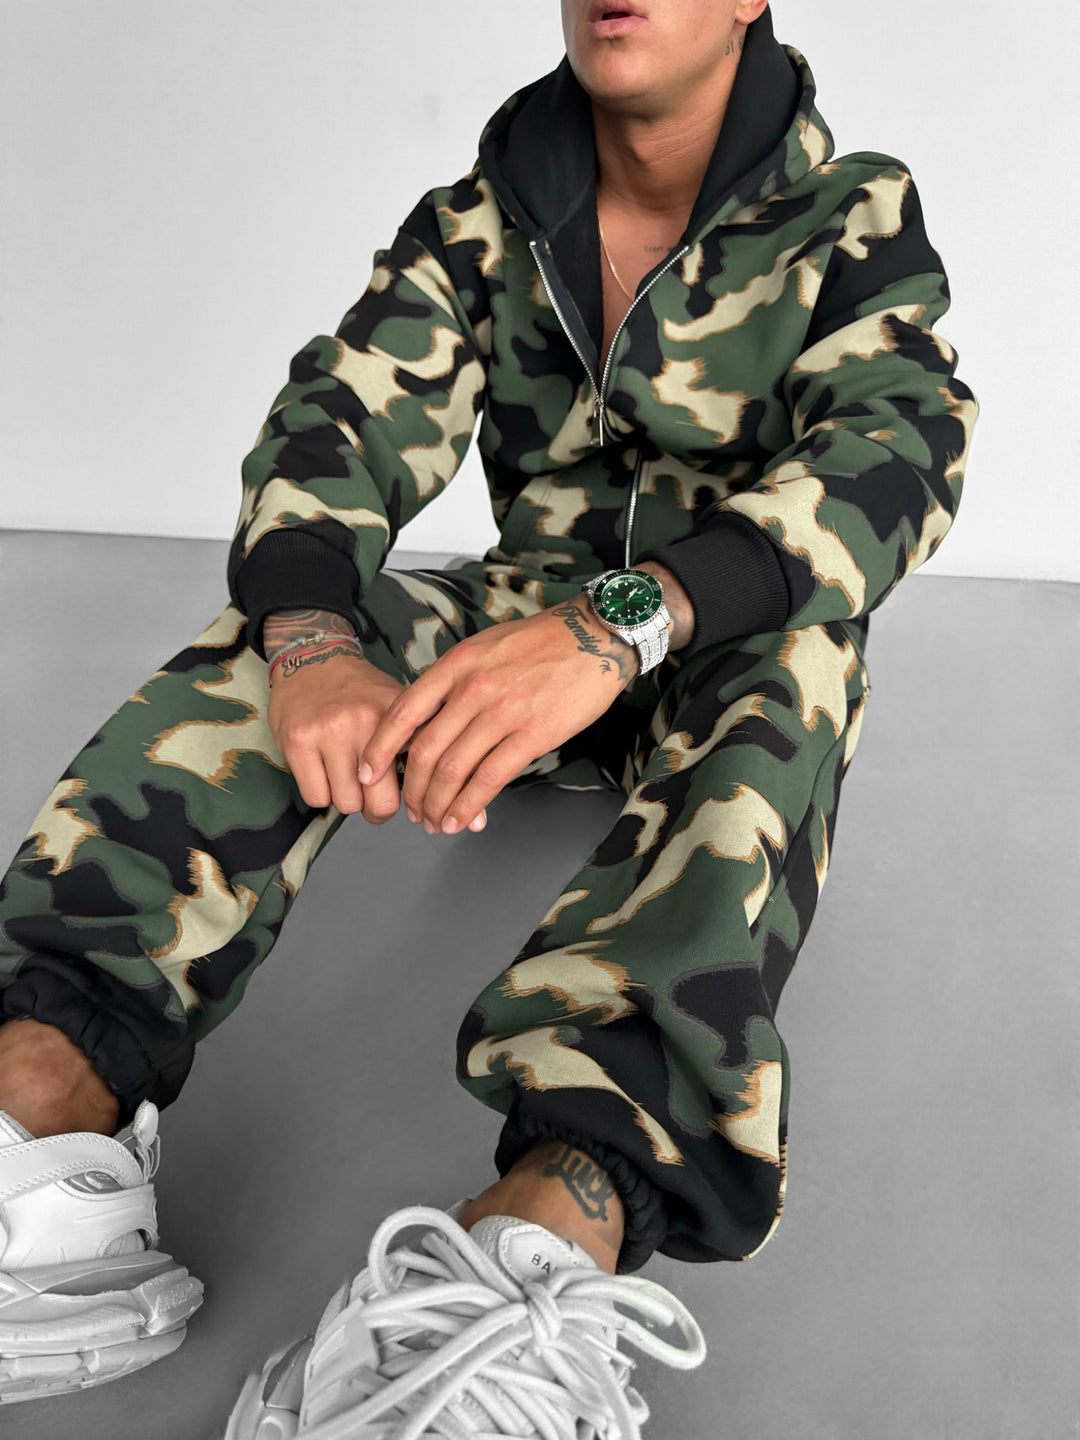 Camouflage Sweatpants - Khaki